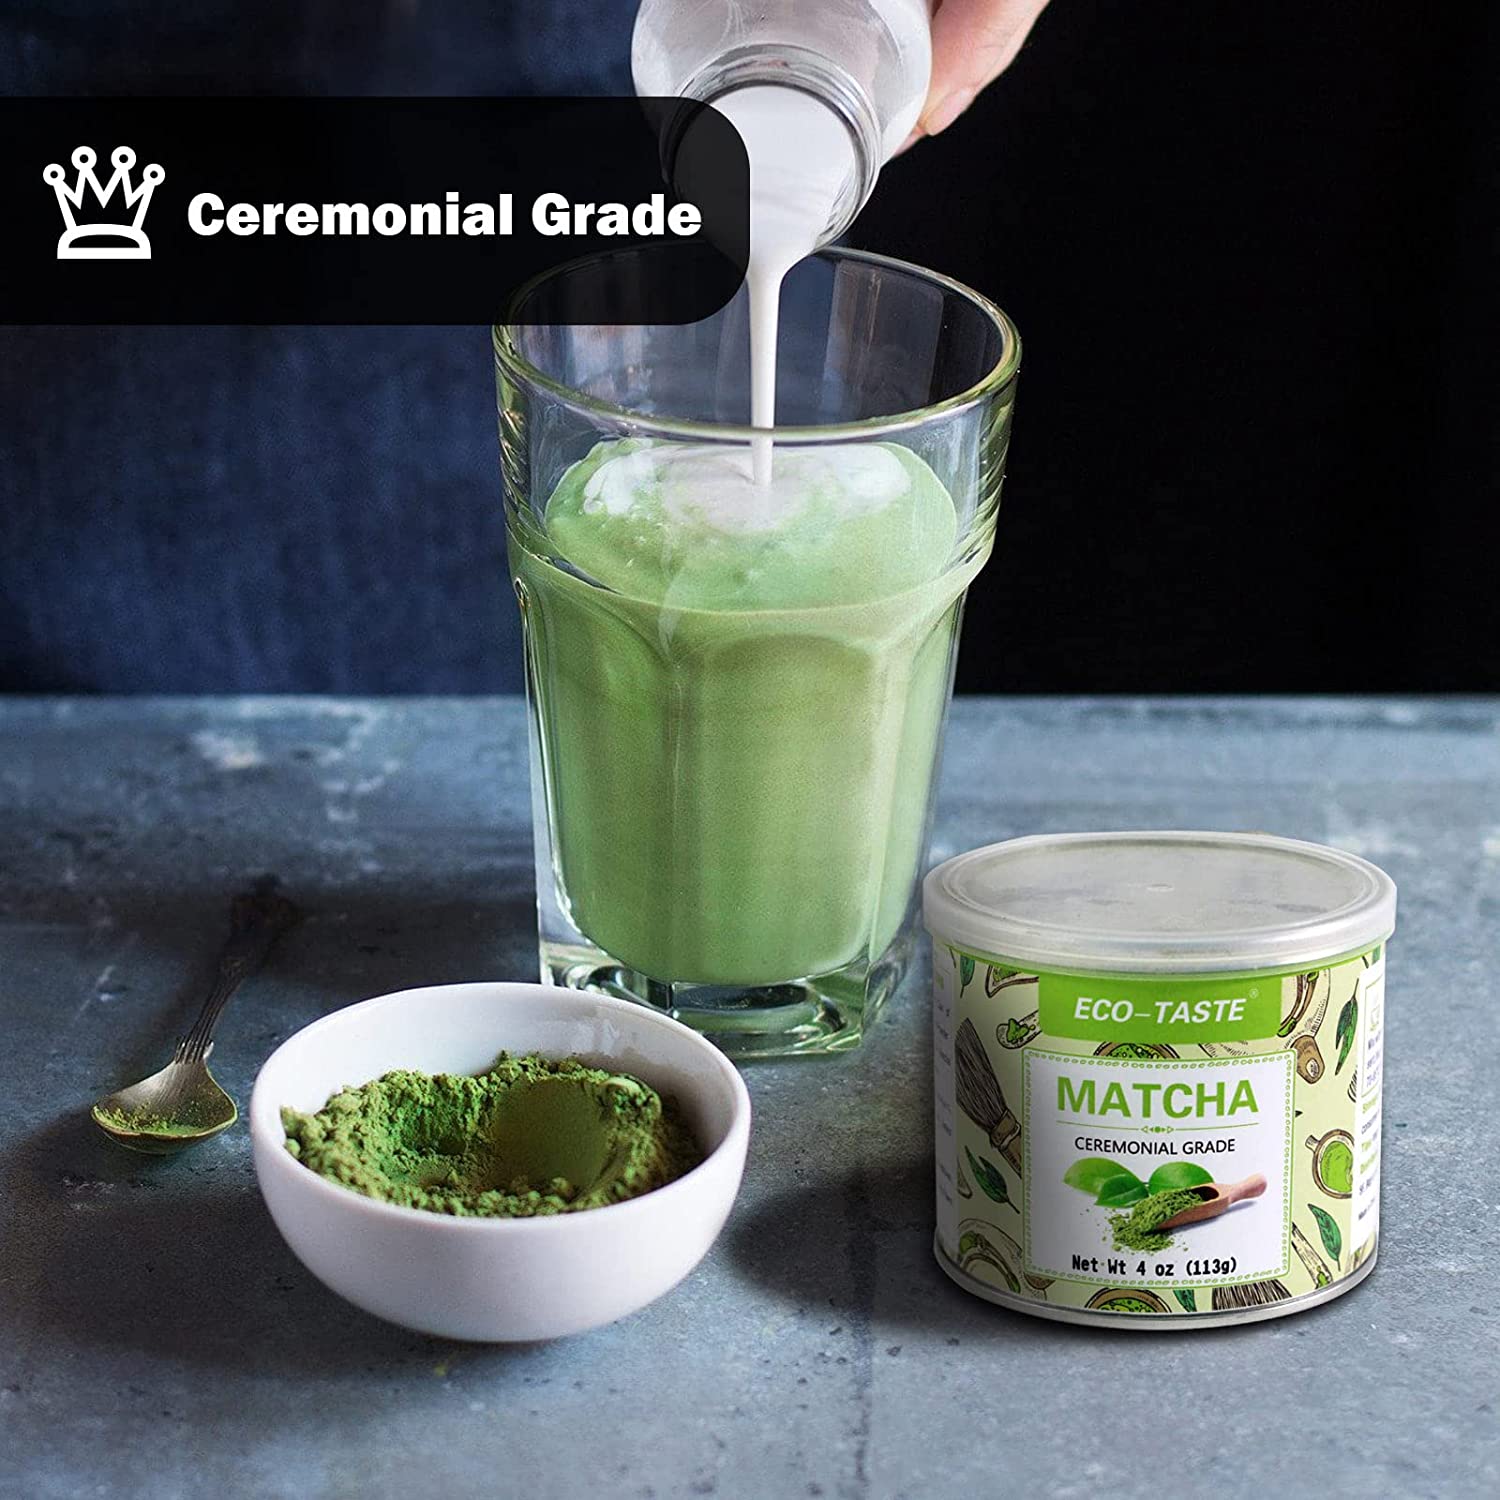  eco heed Matcha Green Tea Powder Organic Ceremonial